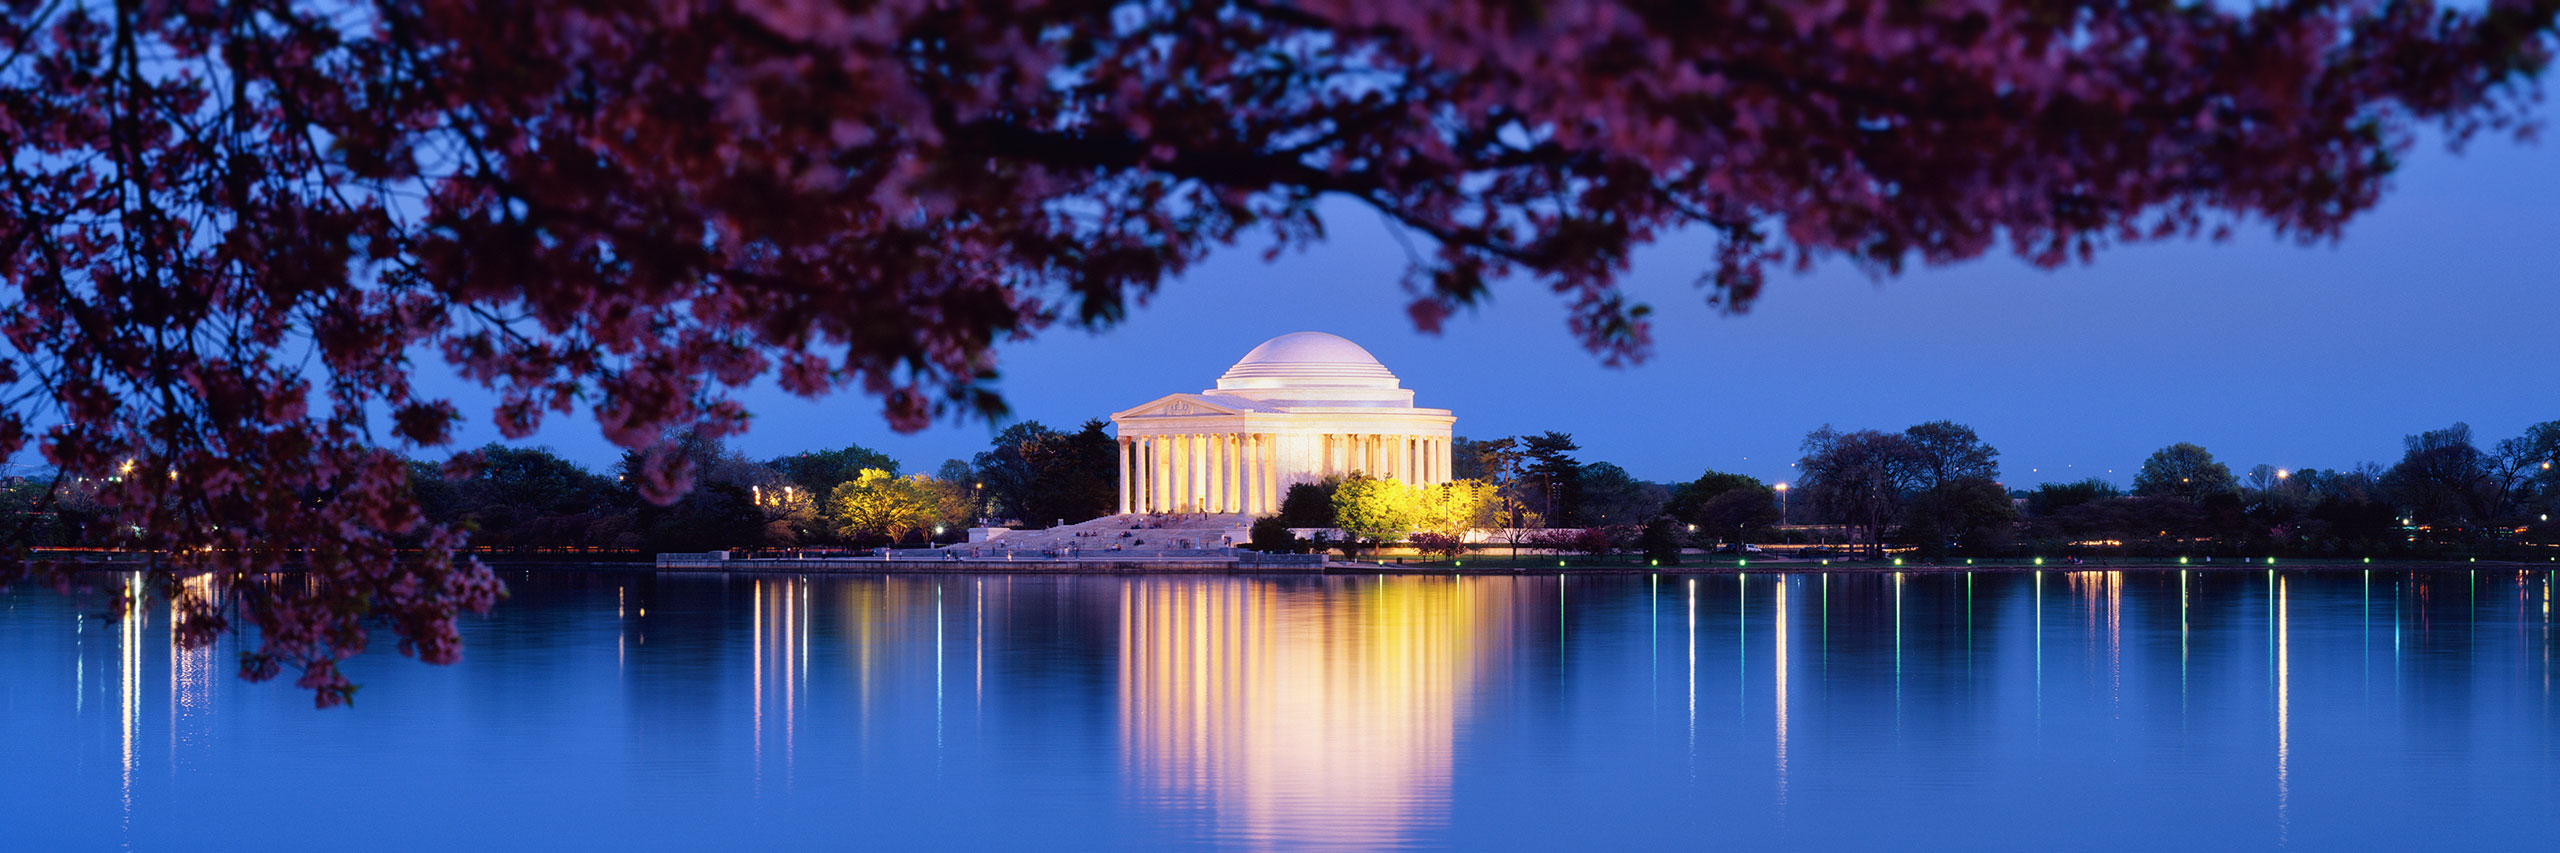 Jefferson Memorial, Washington DC, USA